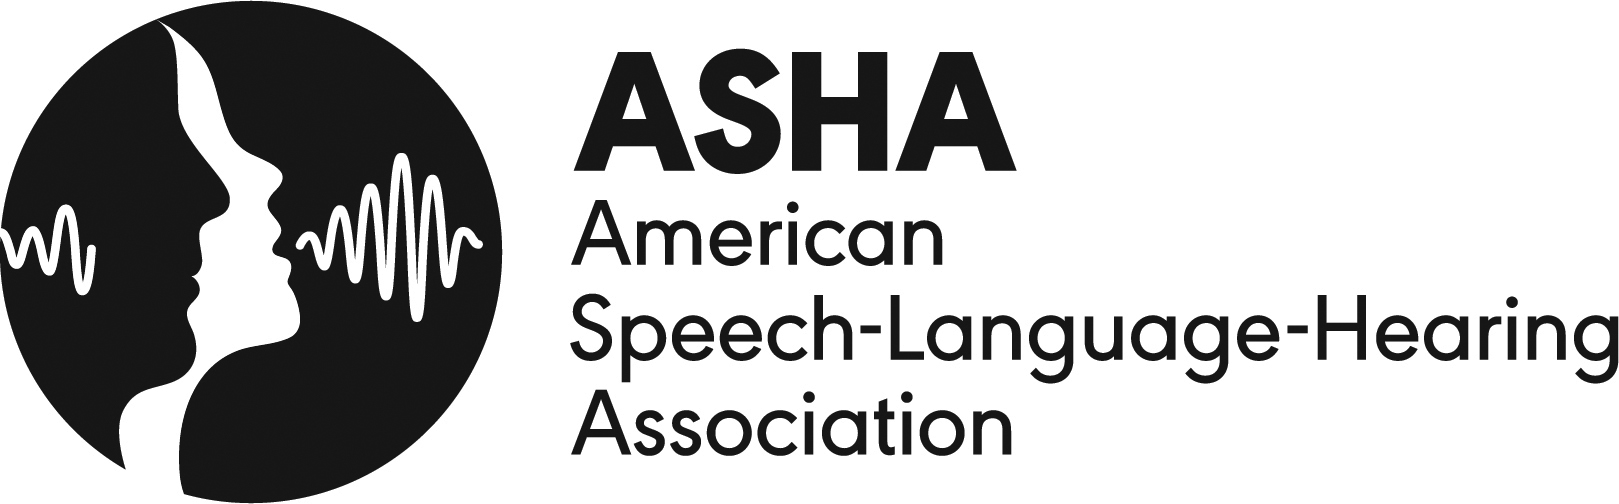 ASHA Company Logo